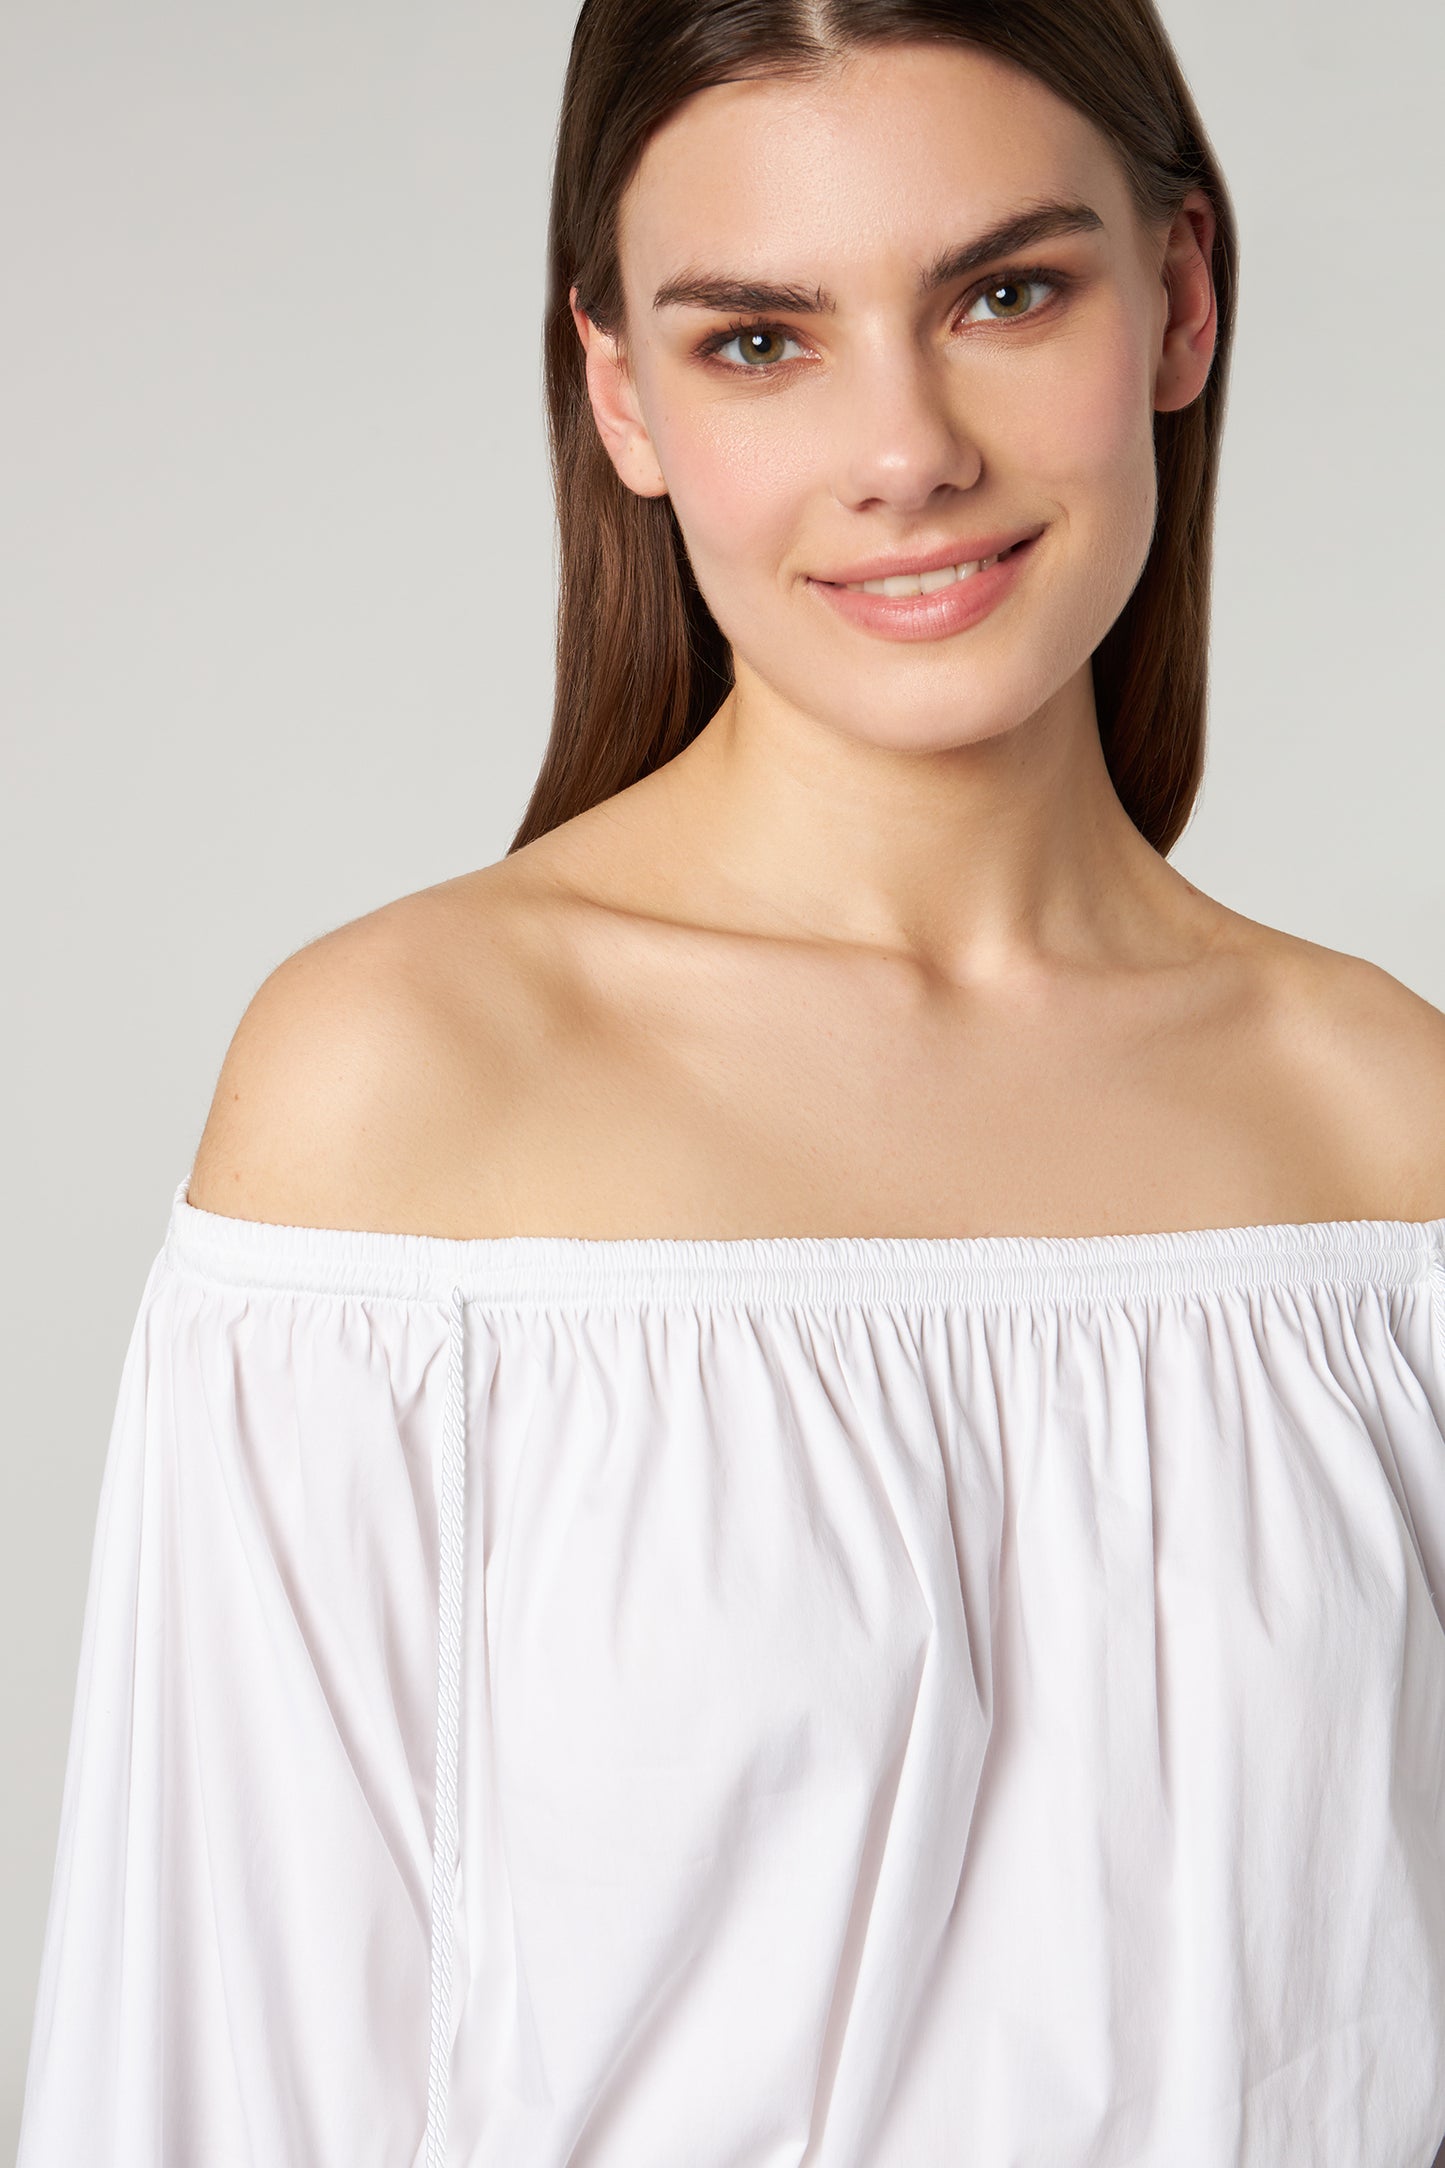 PATRIZIA PEPE Longuette Off Shoulder White Dress